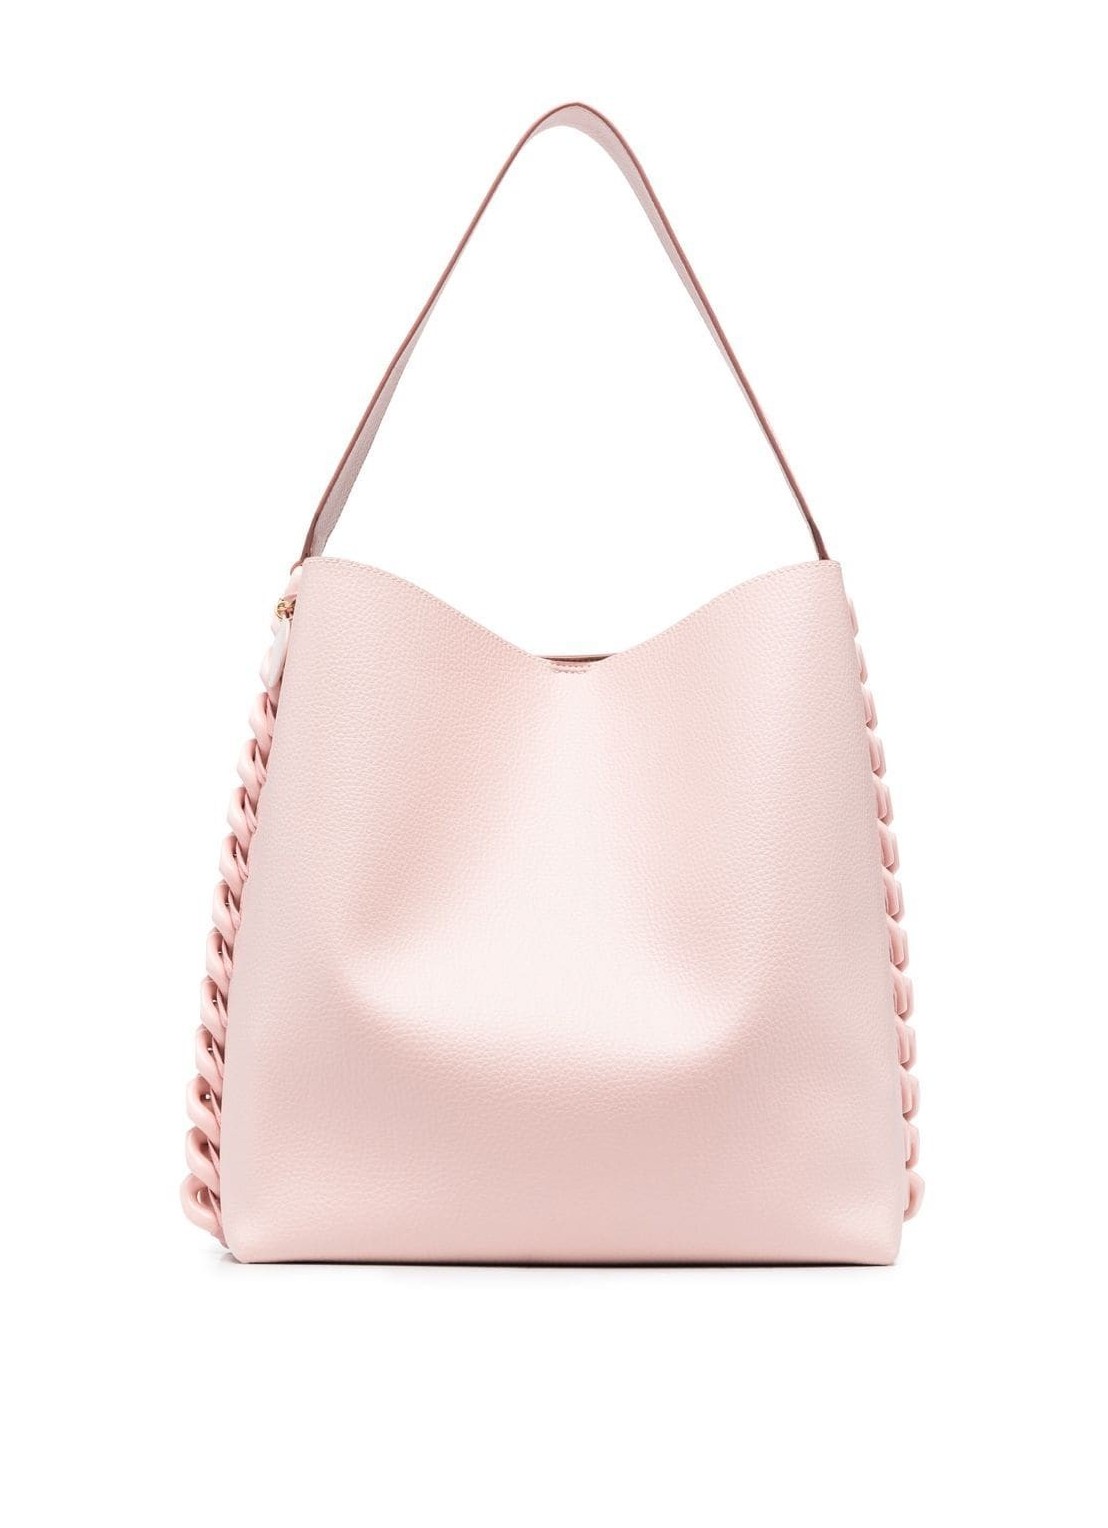 Handbag stella mccartney handbag woman tote bag embossed grainy mat 7b0011wp0065 5609 talla rosa
 